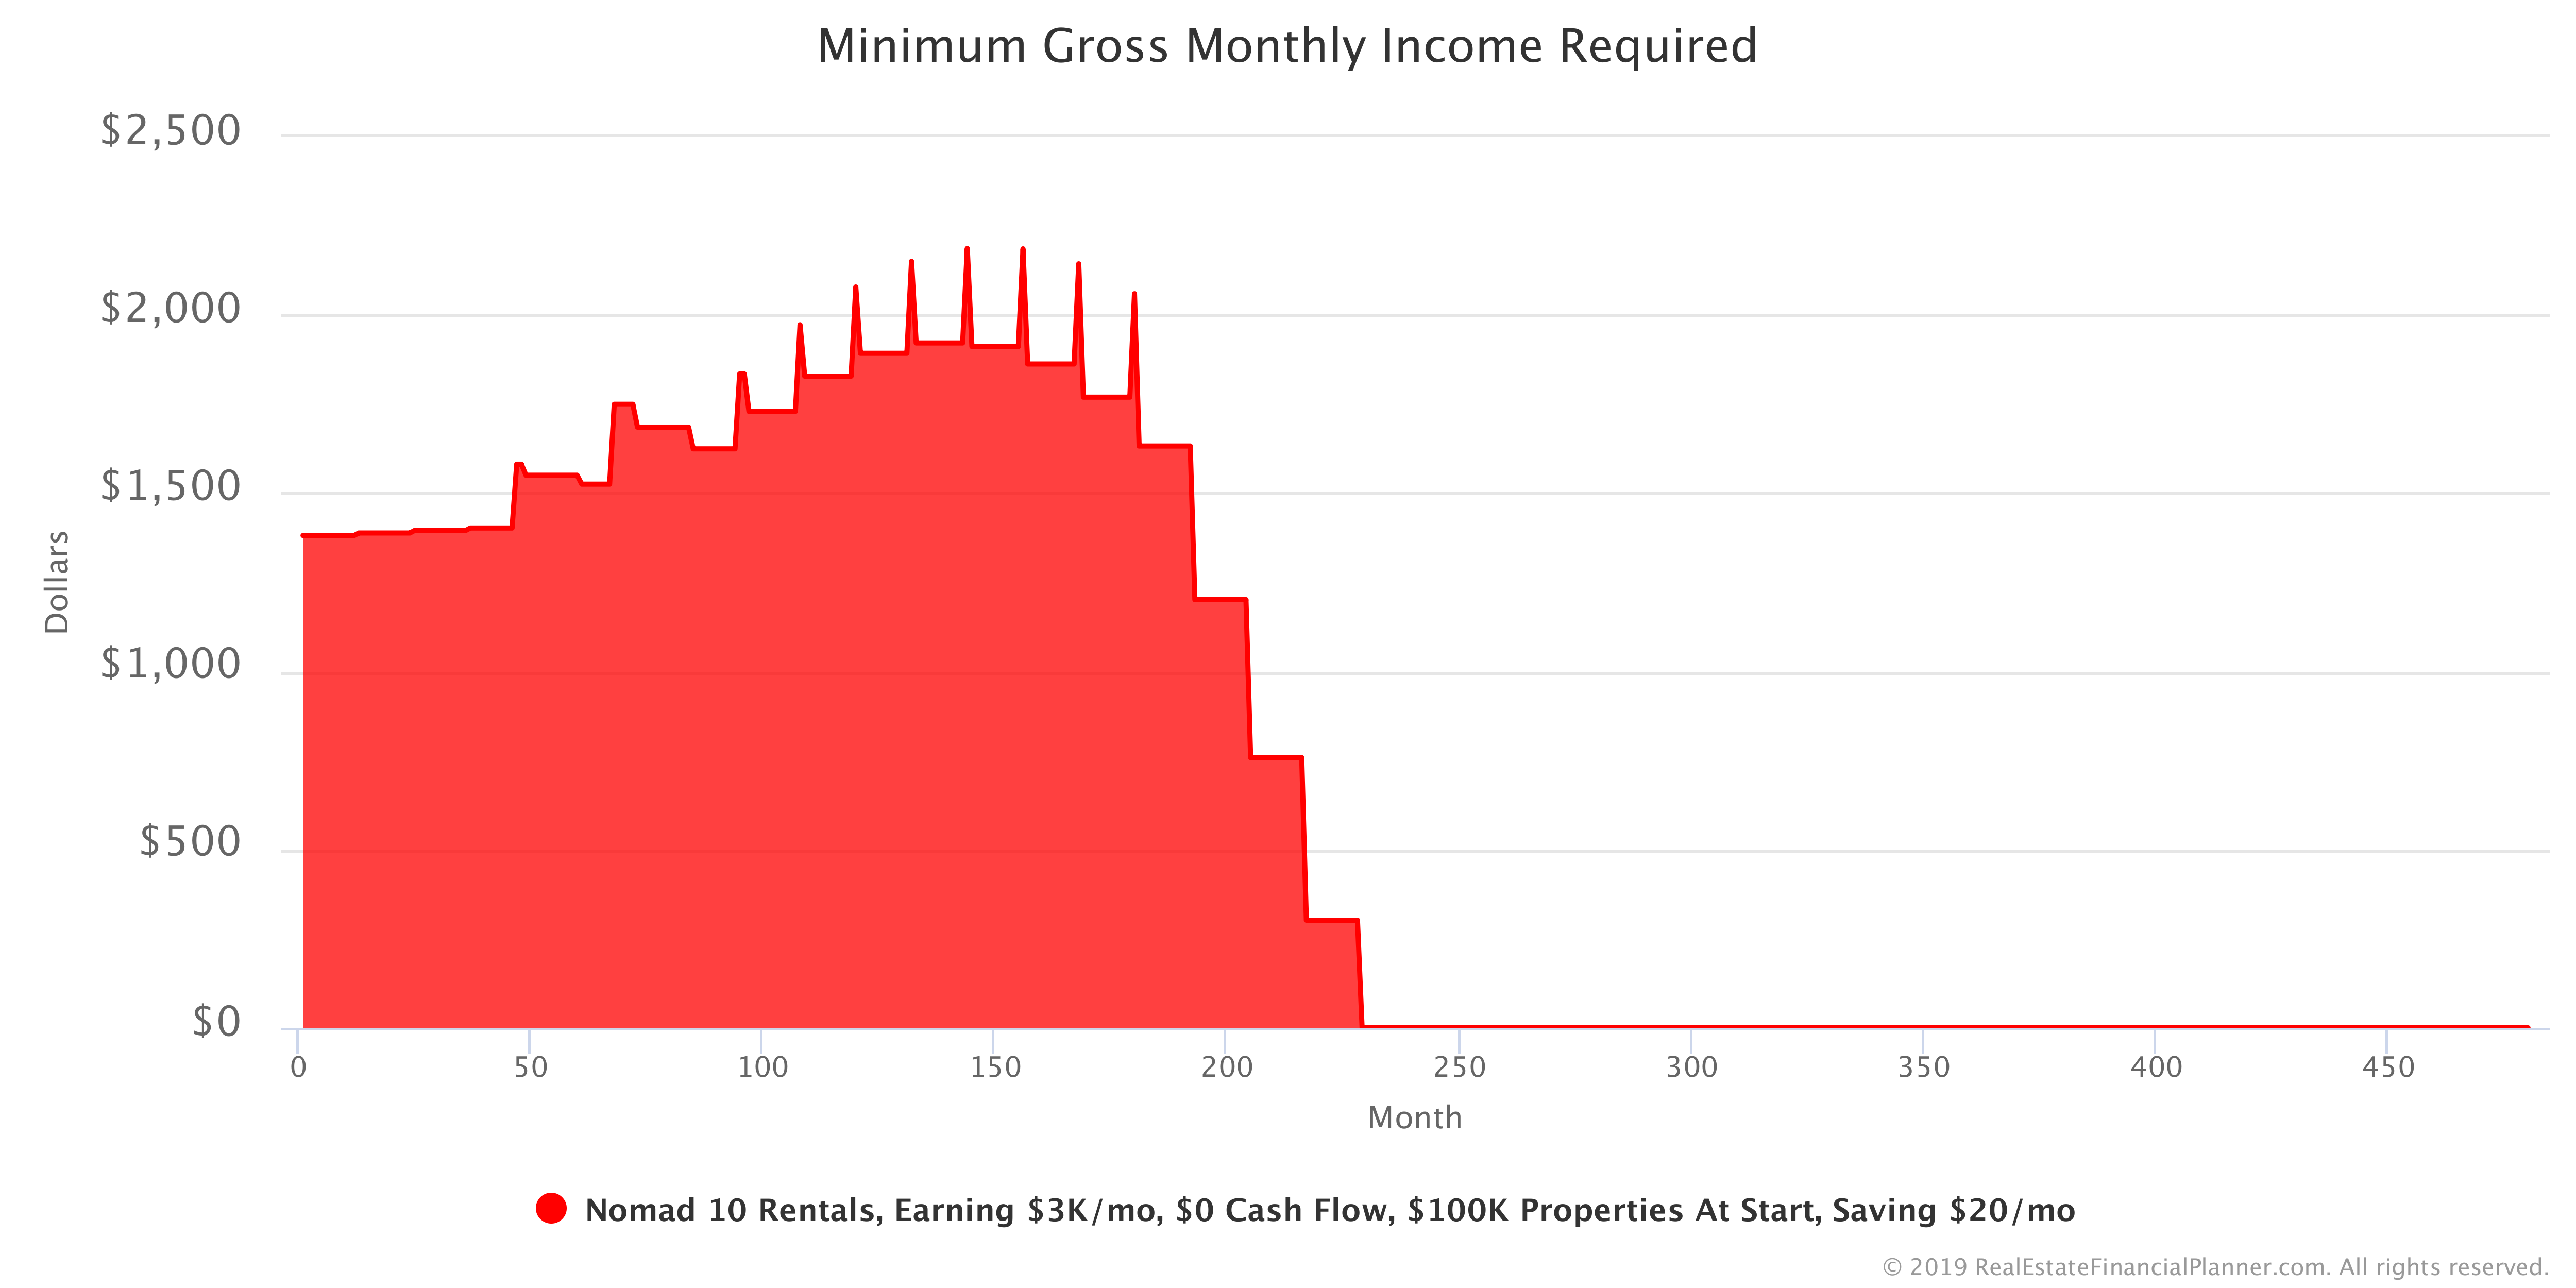 Minimum Gross Monthly Income Required in Scenario